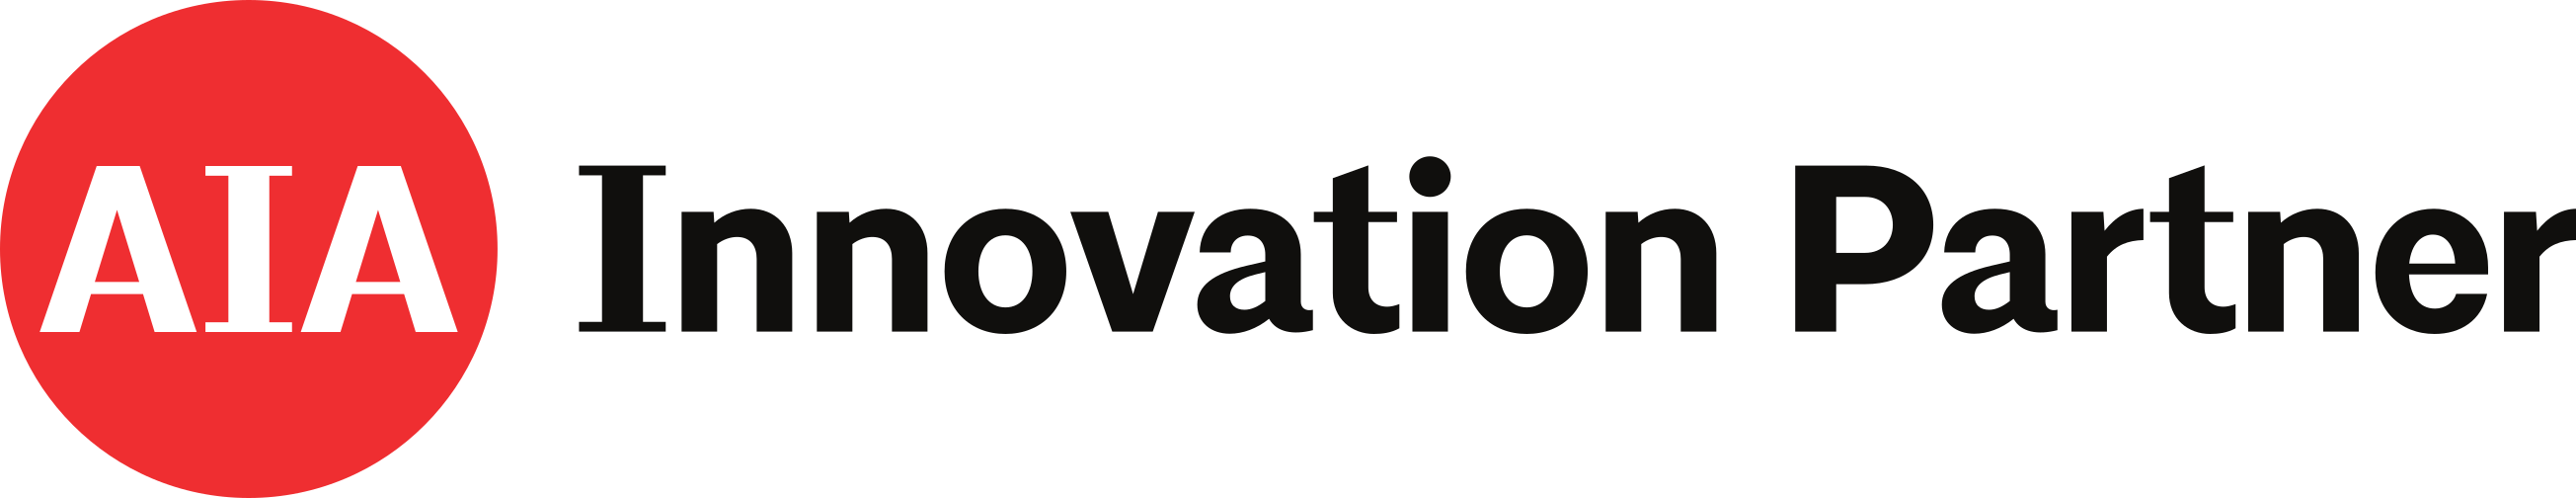 AIA Innovation Partner